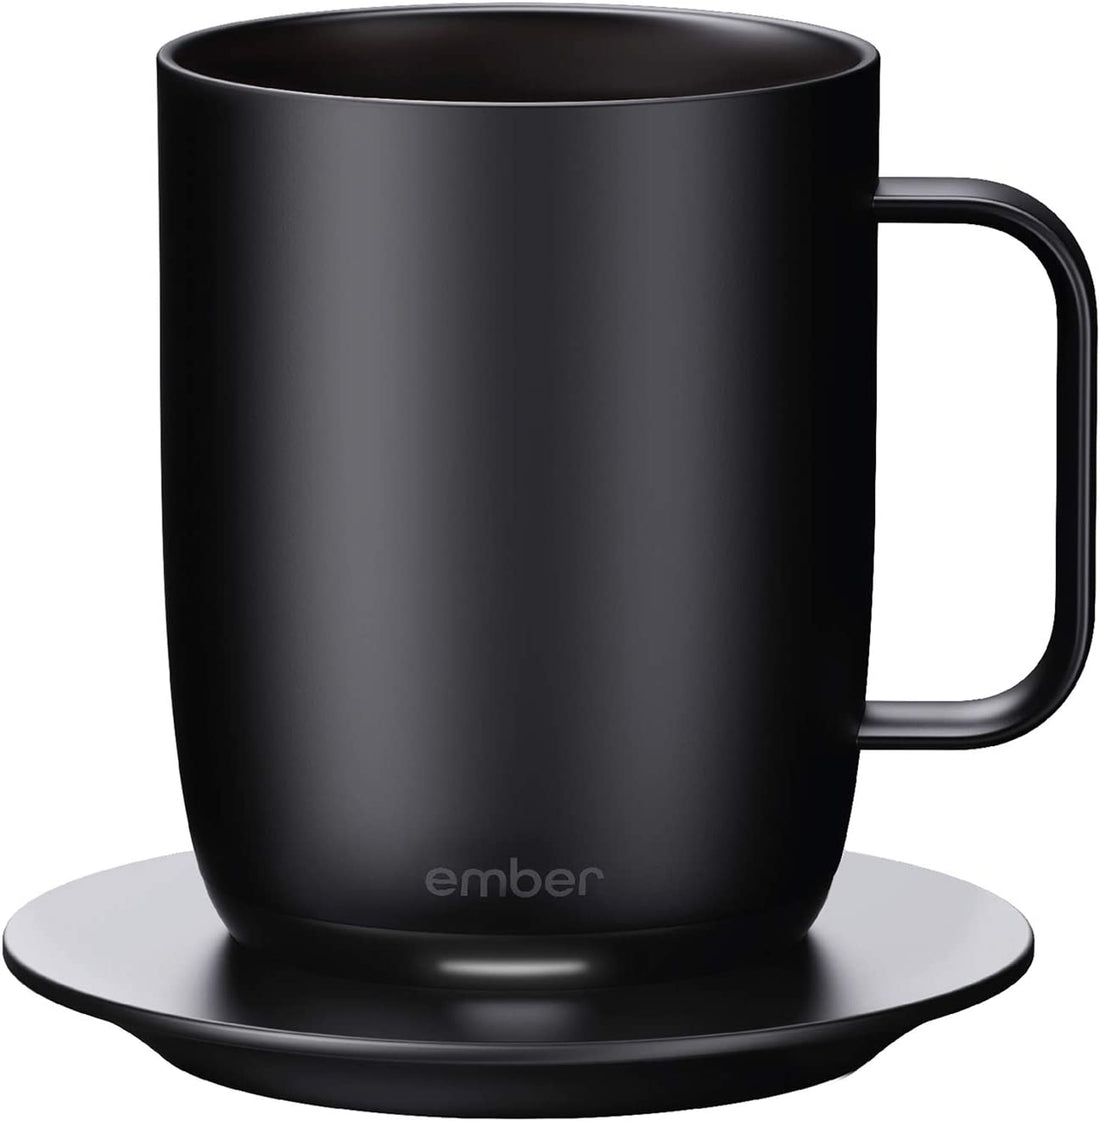 Ember Temperature Control Smart Ceramic Mug, 14 oz, 1-hr Battery Life - Black (Refurbished)